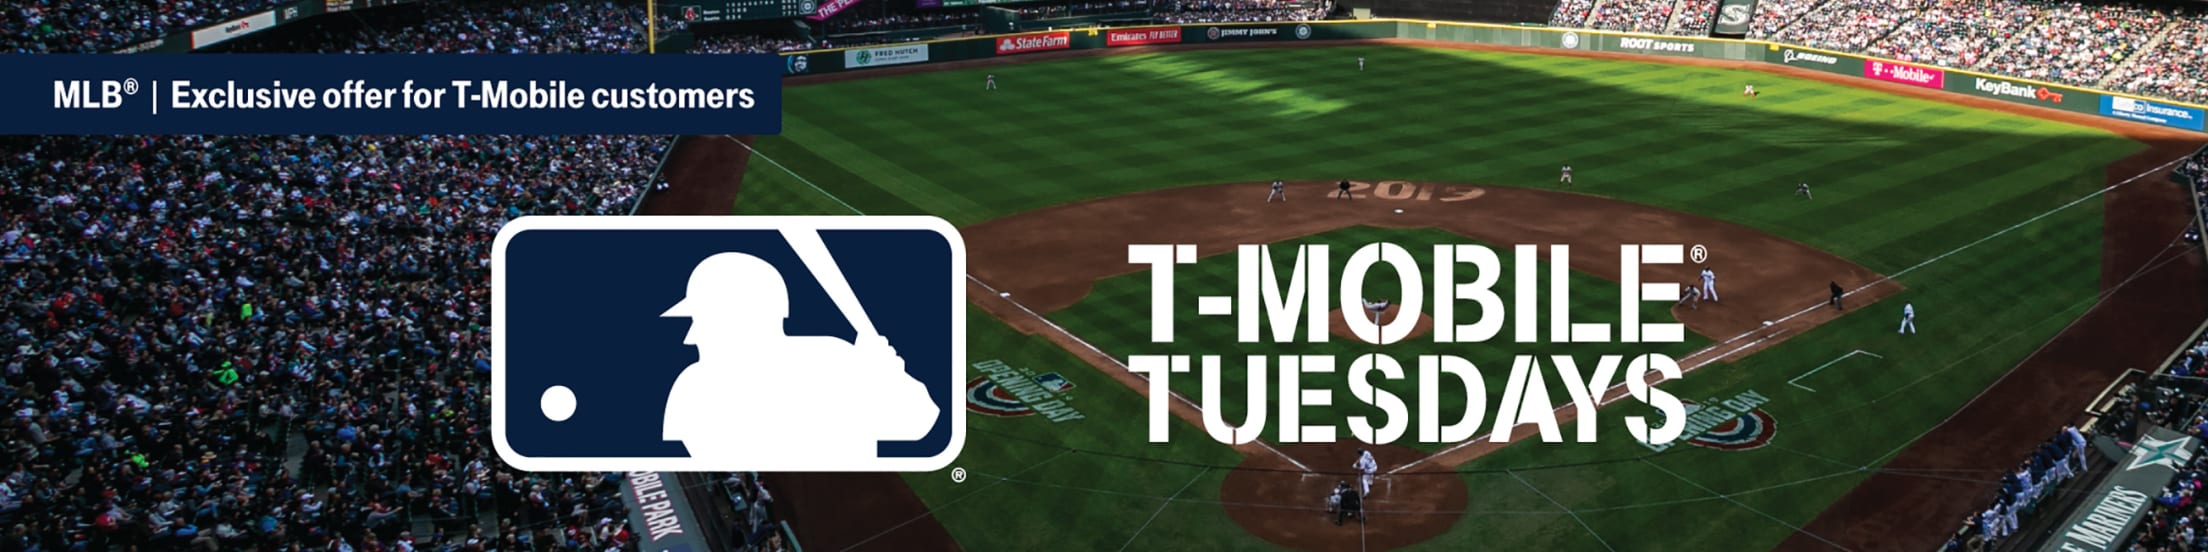 MLB TMobile Tuesdays Tickets